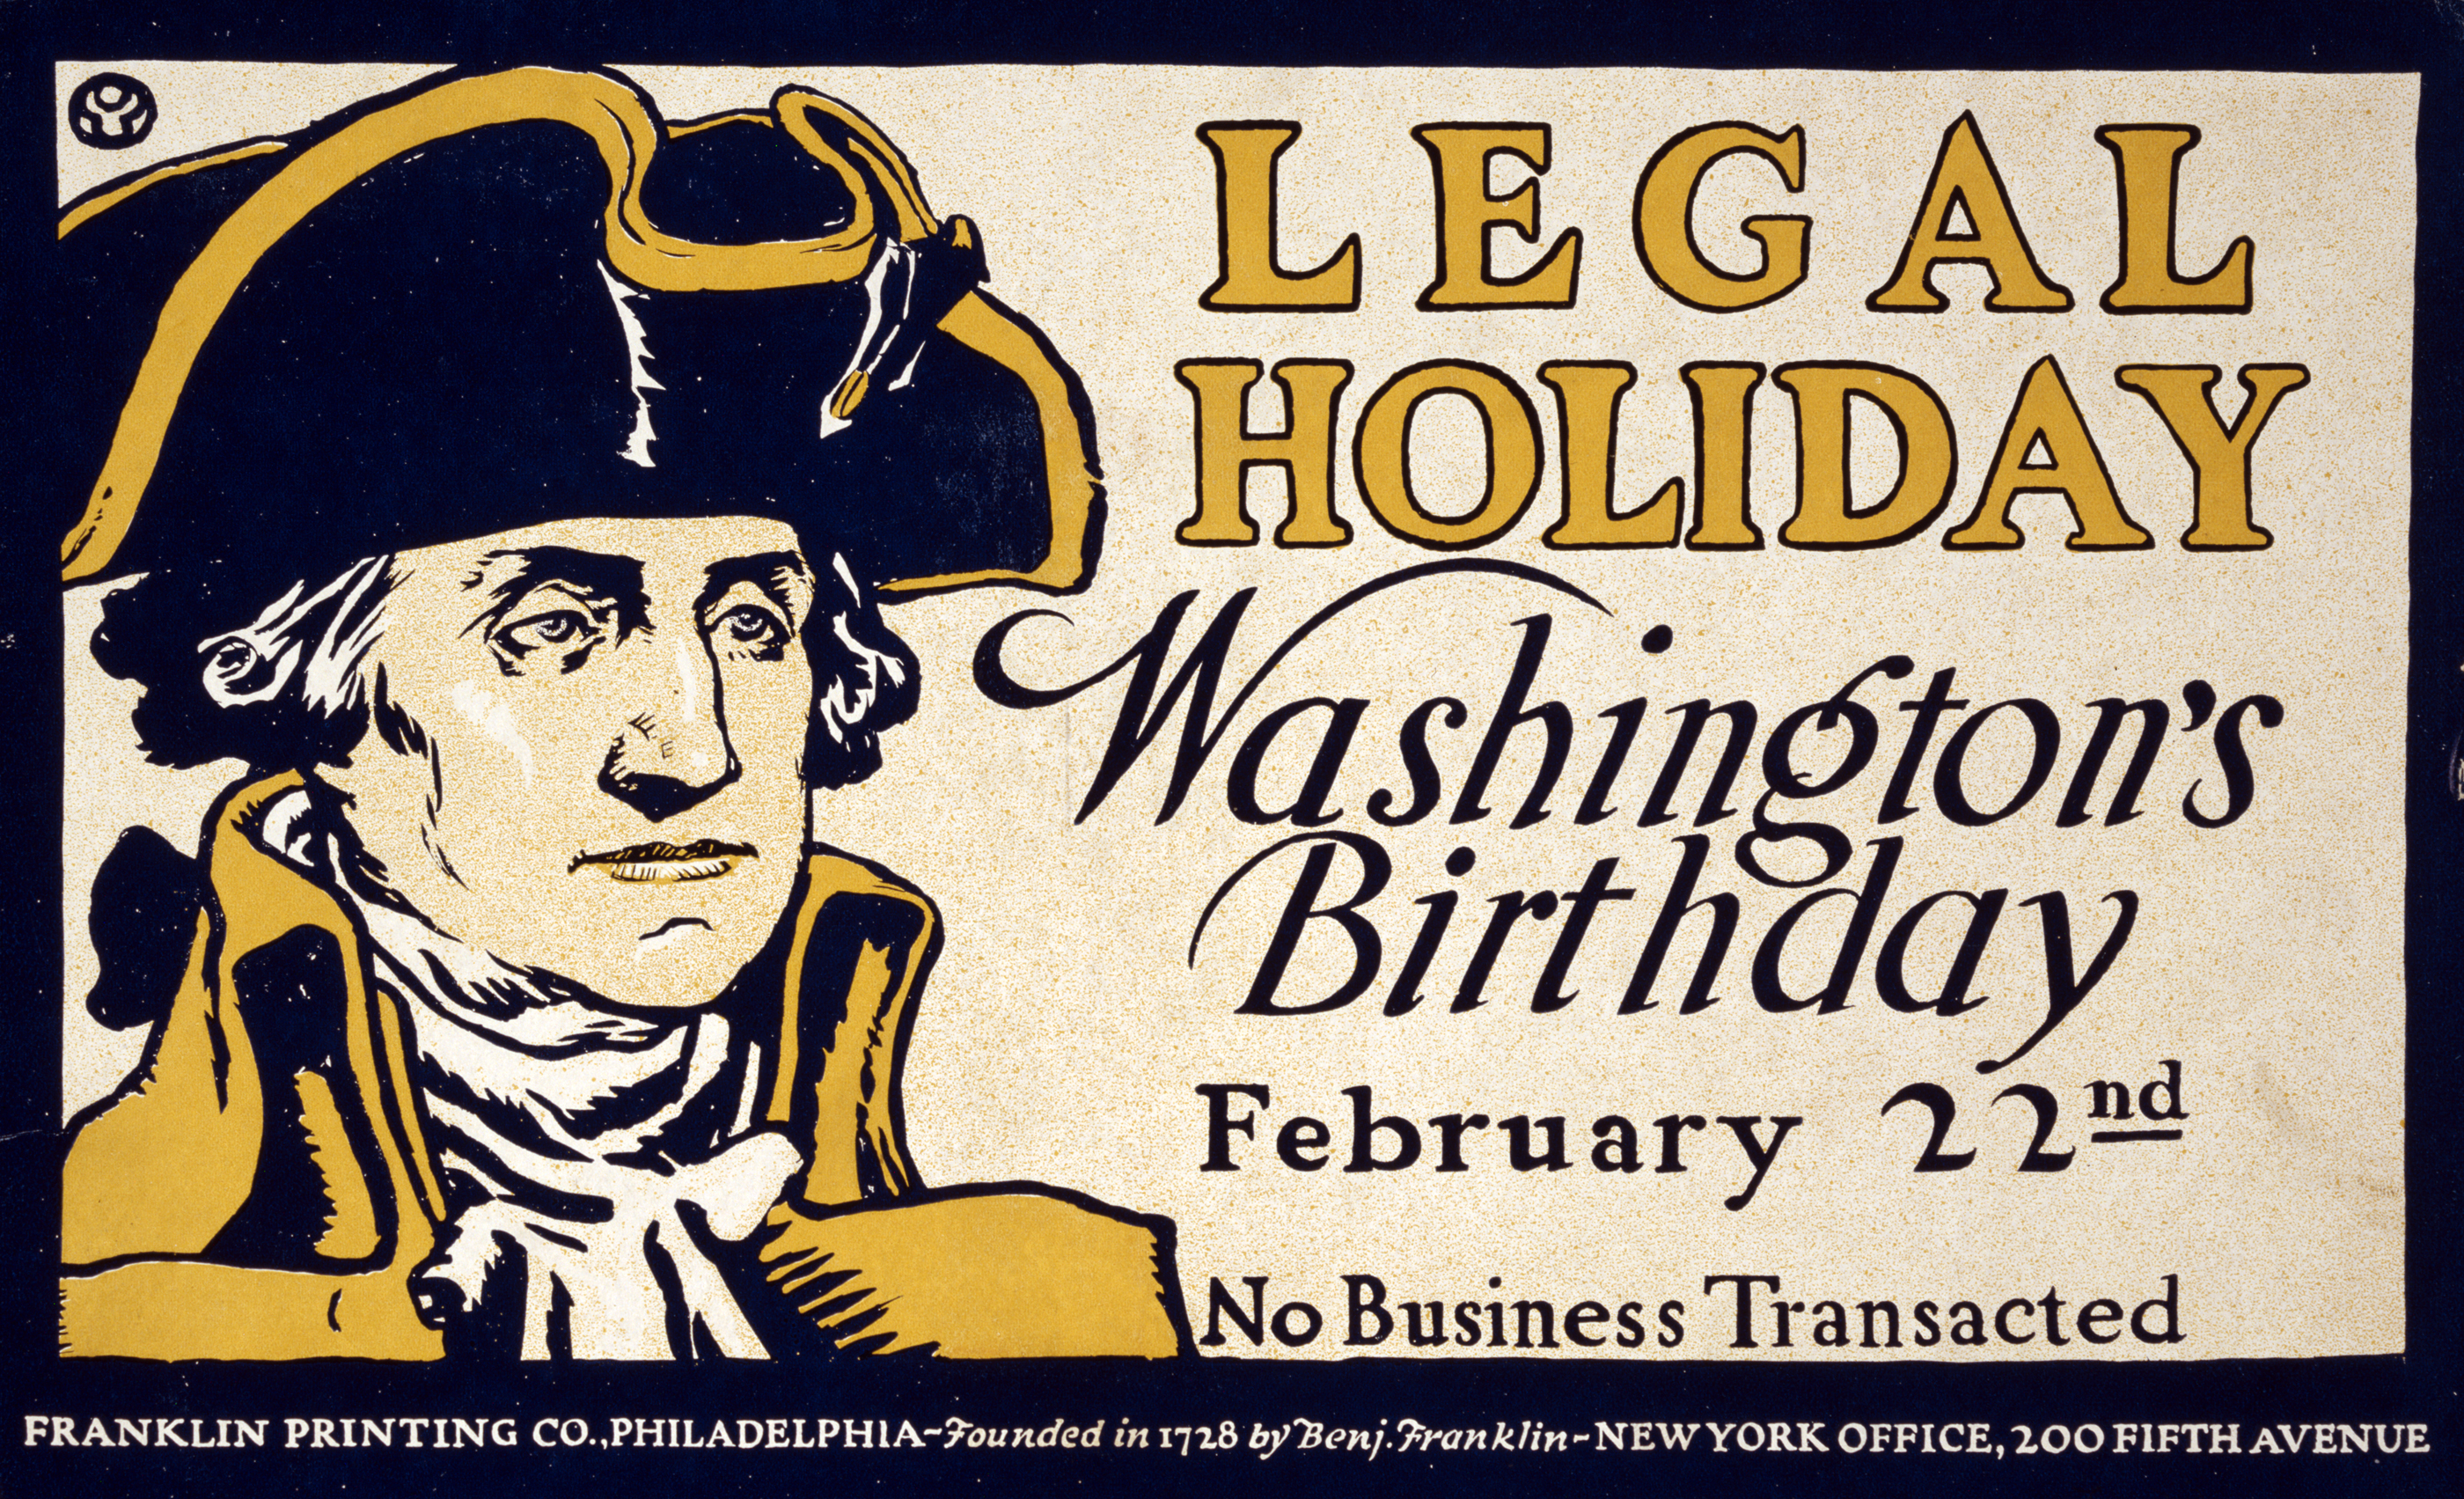 When Did Washington's Birthday A Holiday